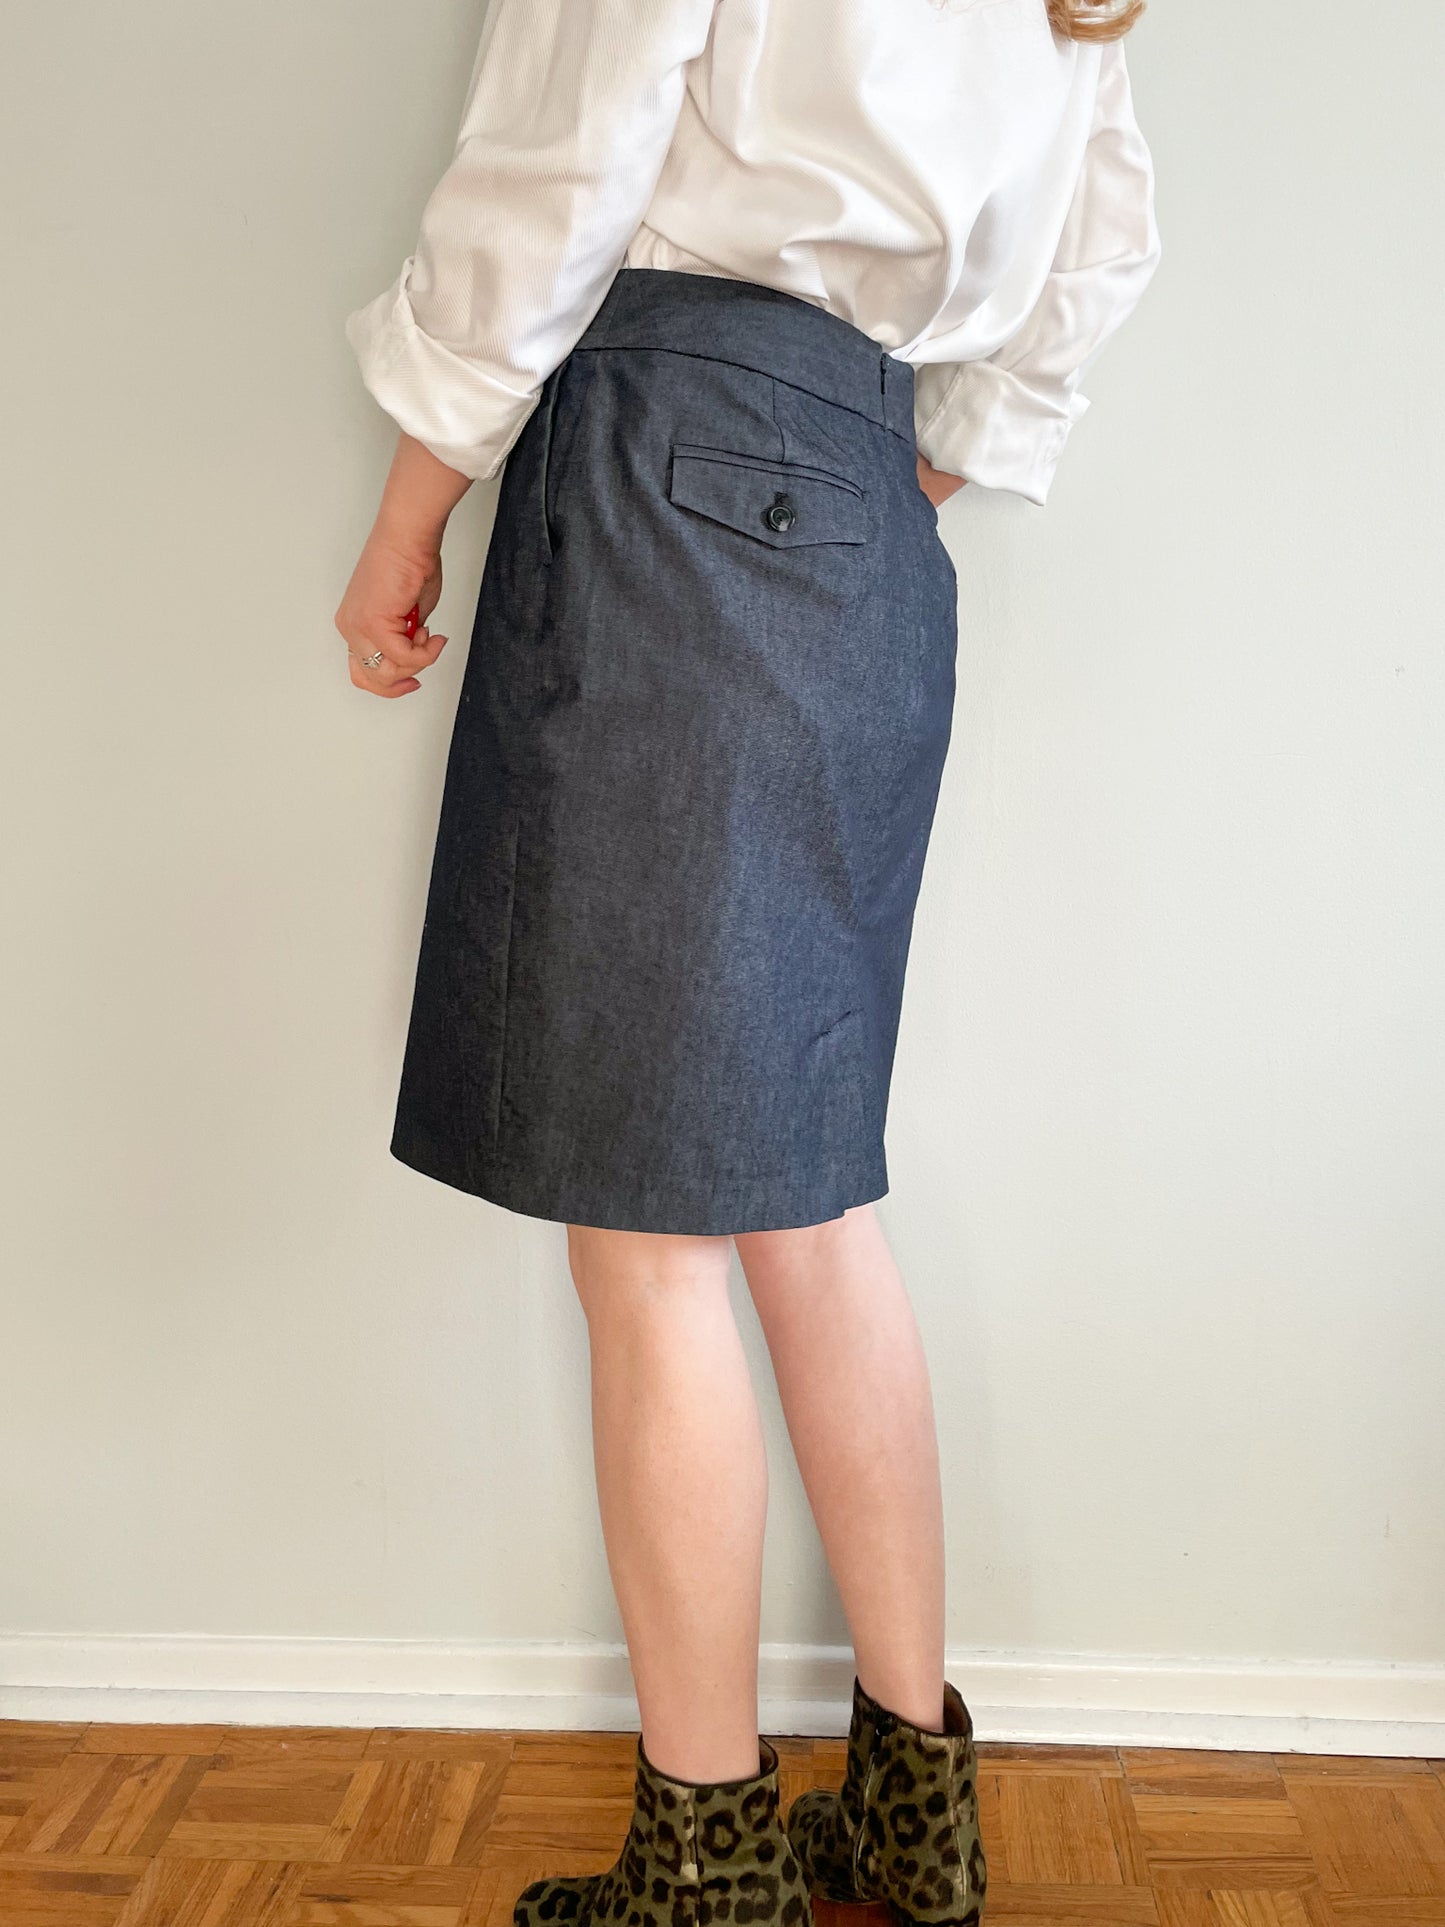 Liz Claiborne Denim Midi Pencil Skirt - Size 8